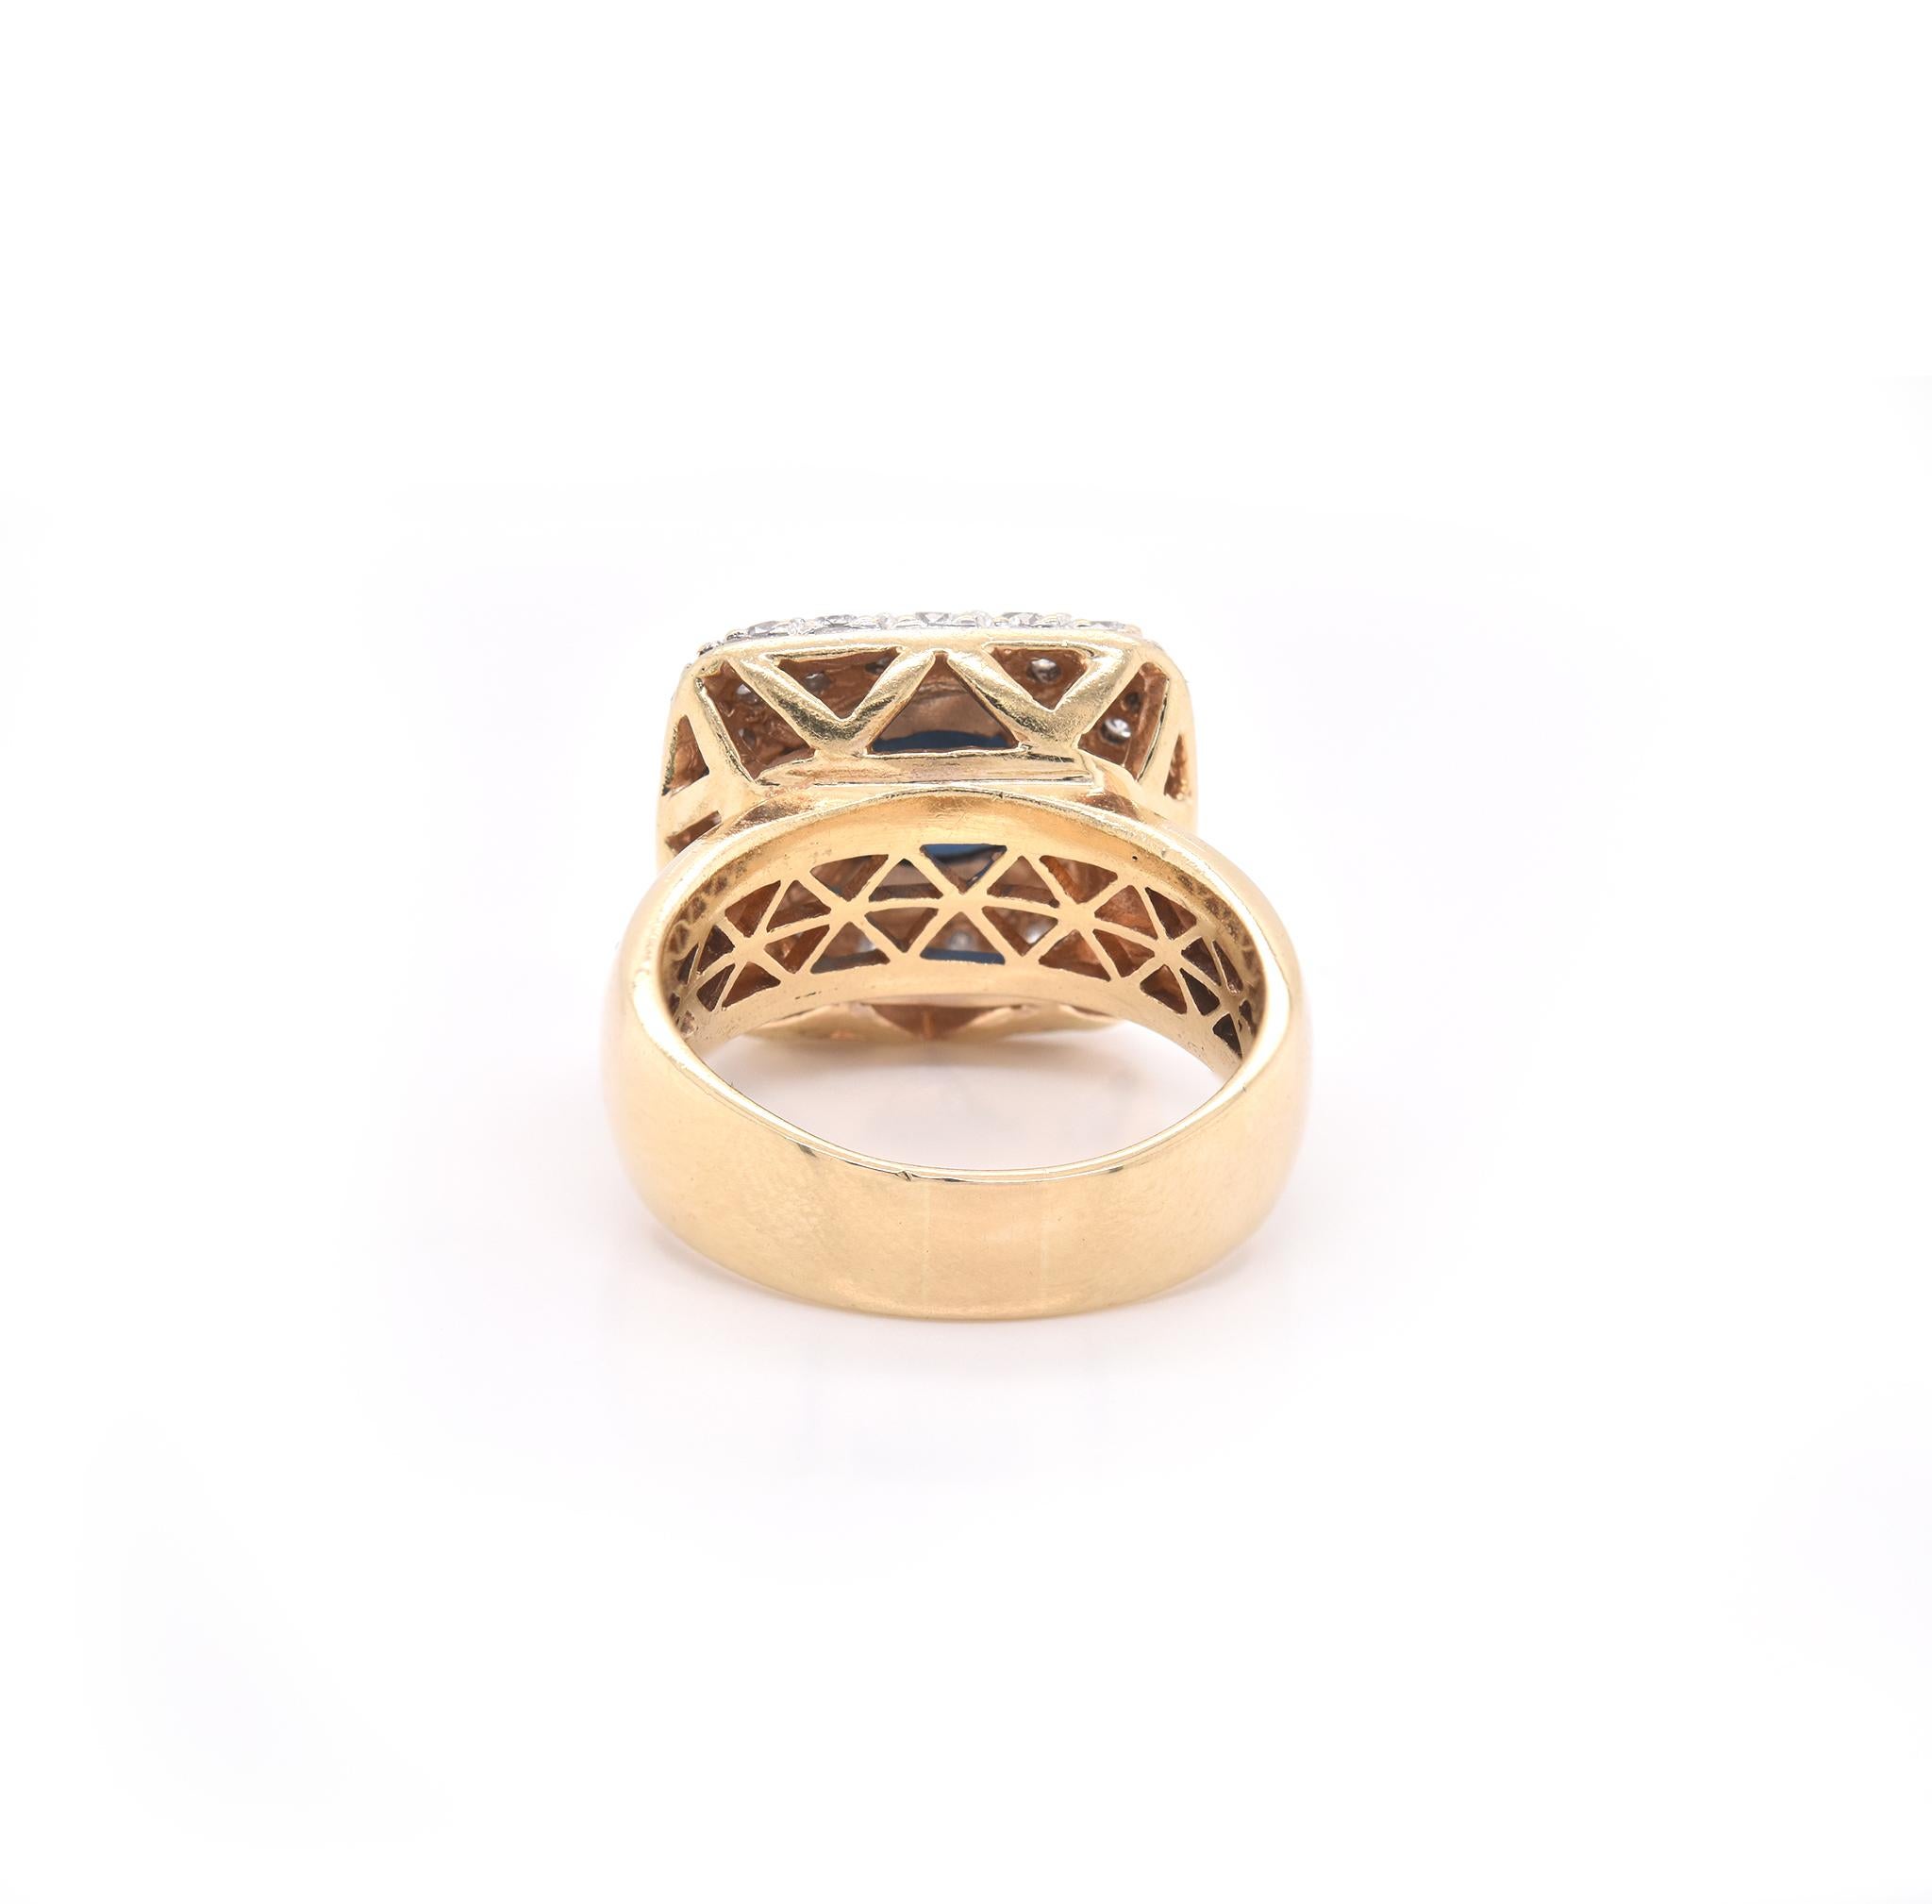 Round Cut 14 Karat Yellow Gold Sapphire and Diamond Ring